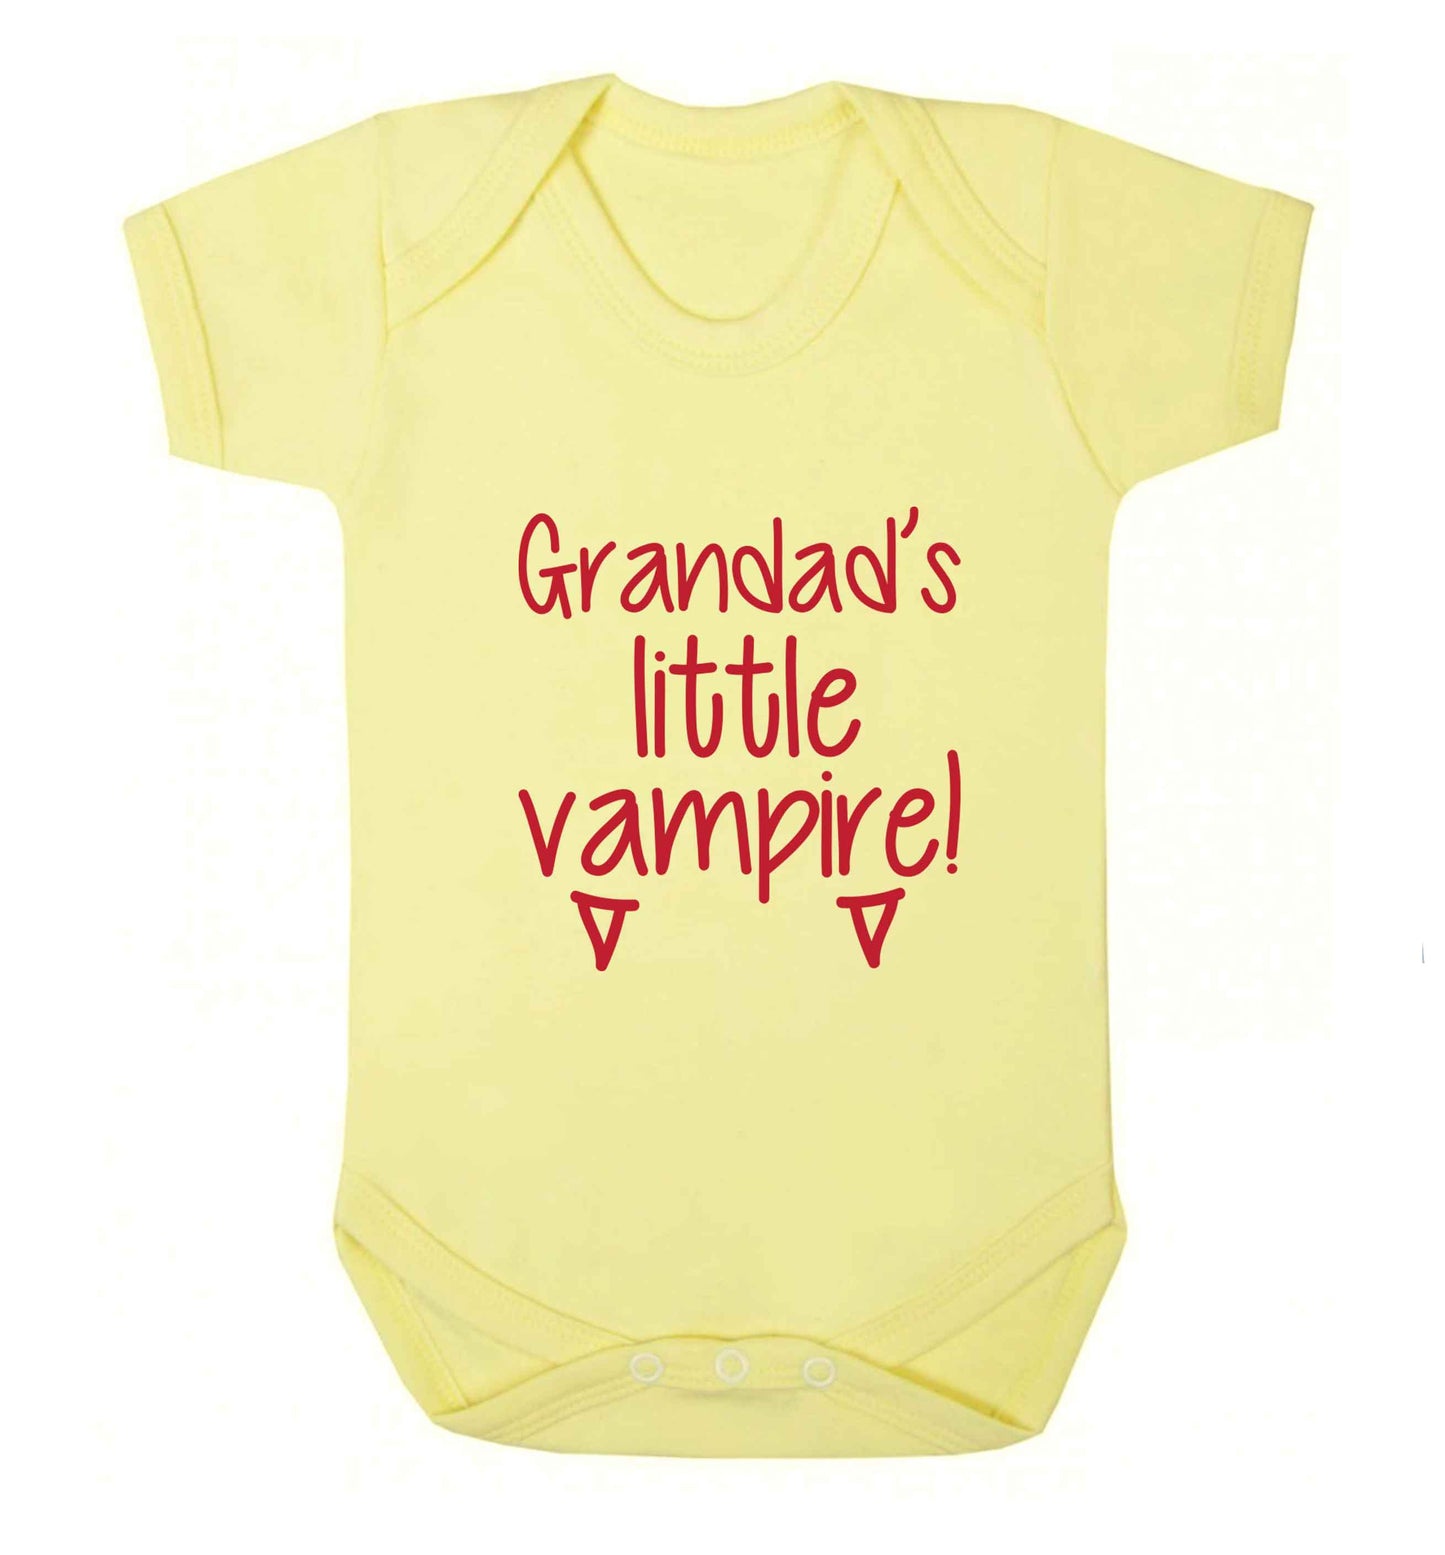 Grandad's little vampire baby vest pale yellow 18-24 months